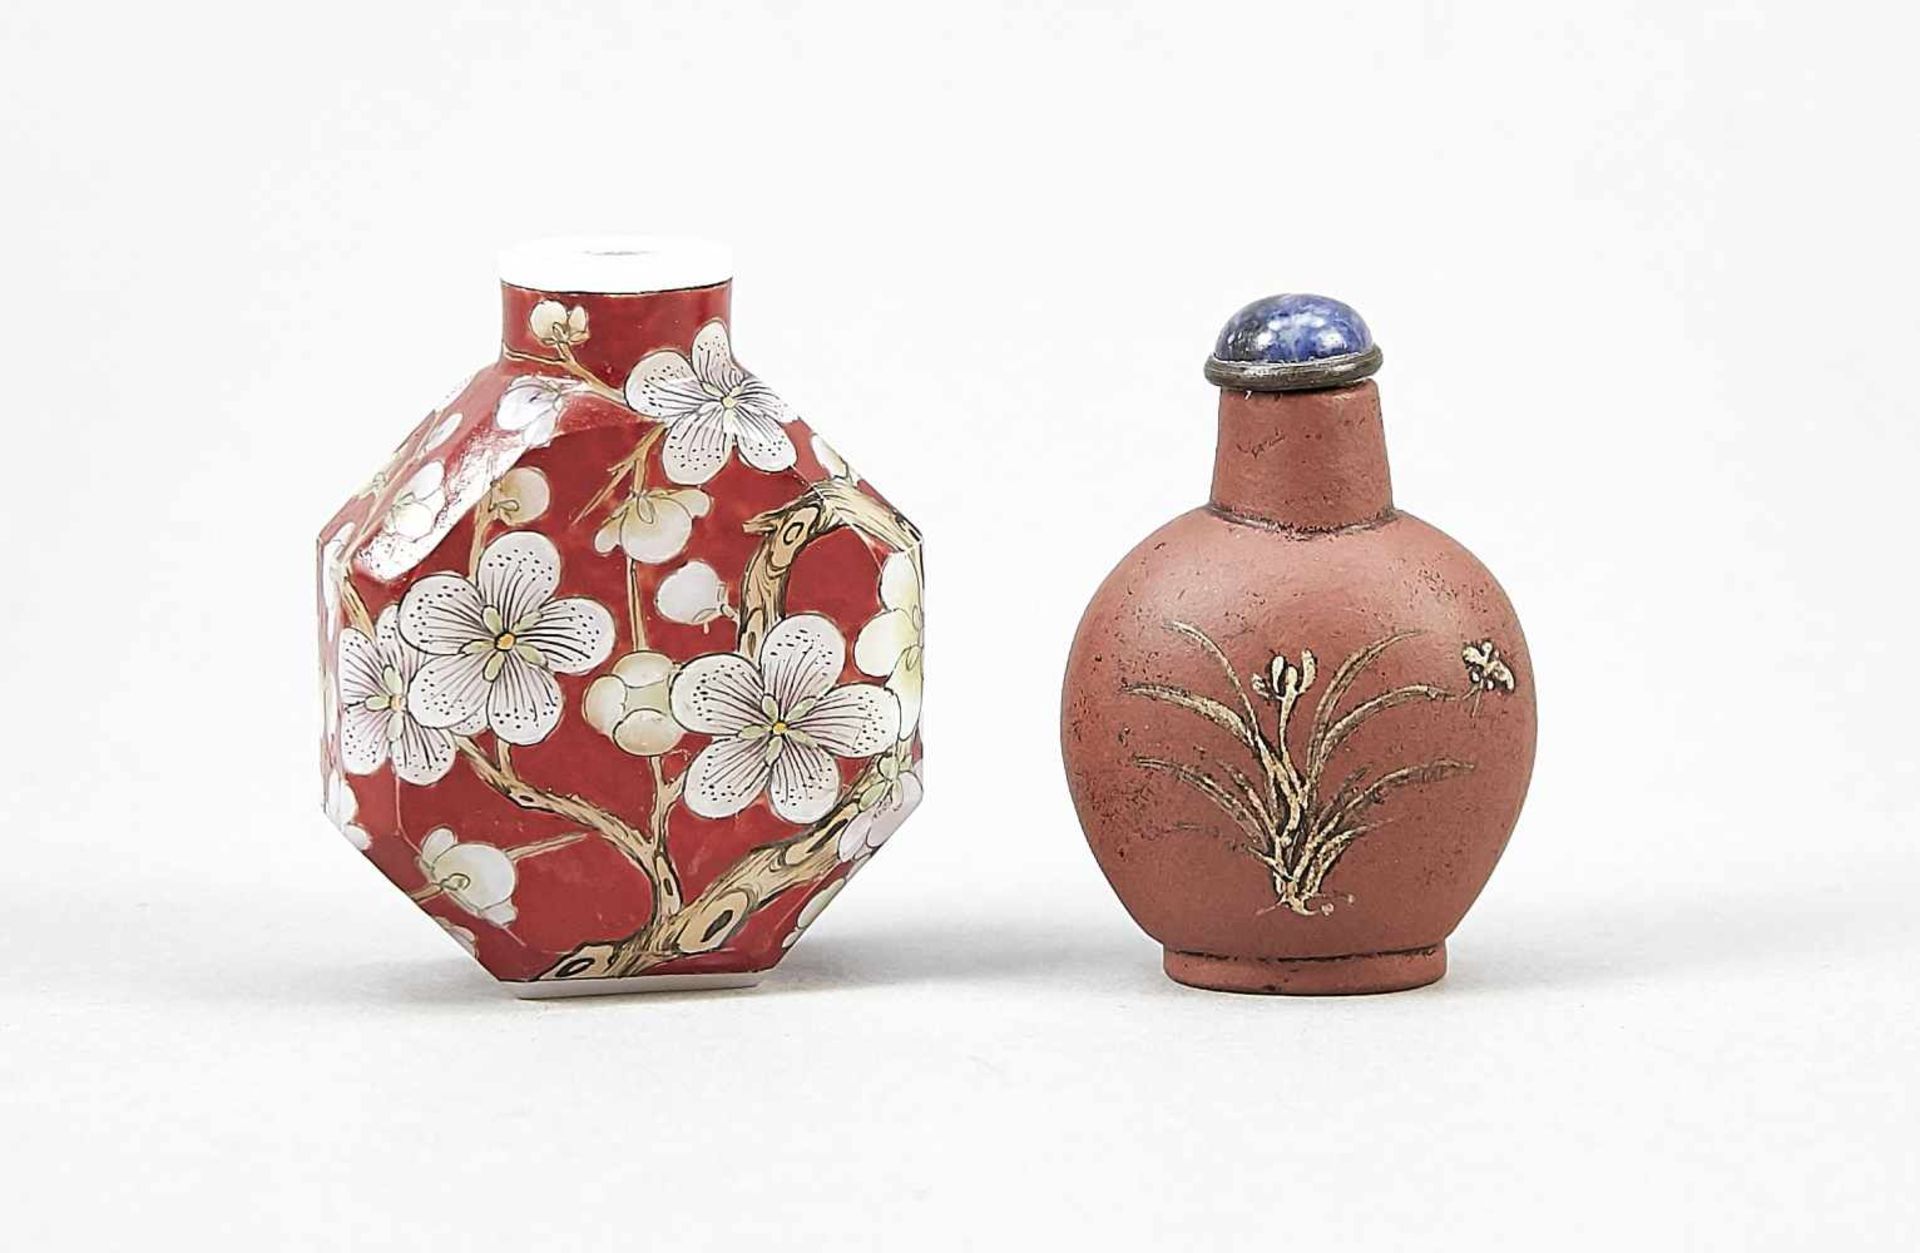 2 Snuffbottles, China, wohl 19. Jh., 1 x Pekingglas mit Blumenmalerei auf eisenrotem Fond,unter